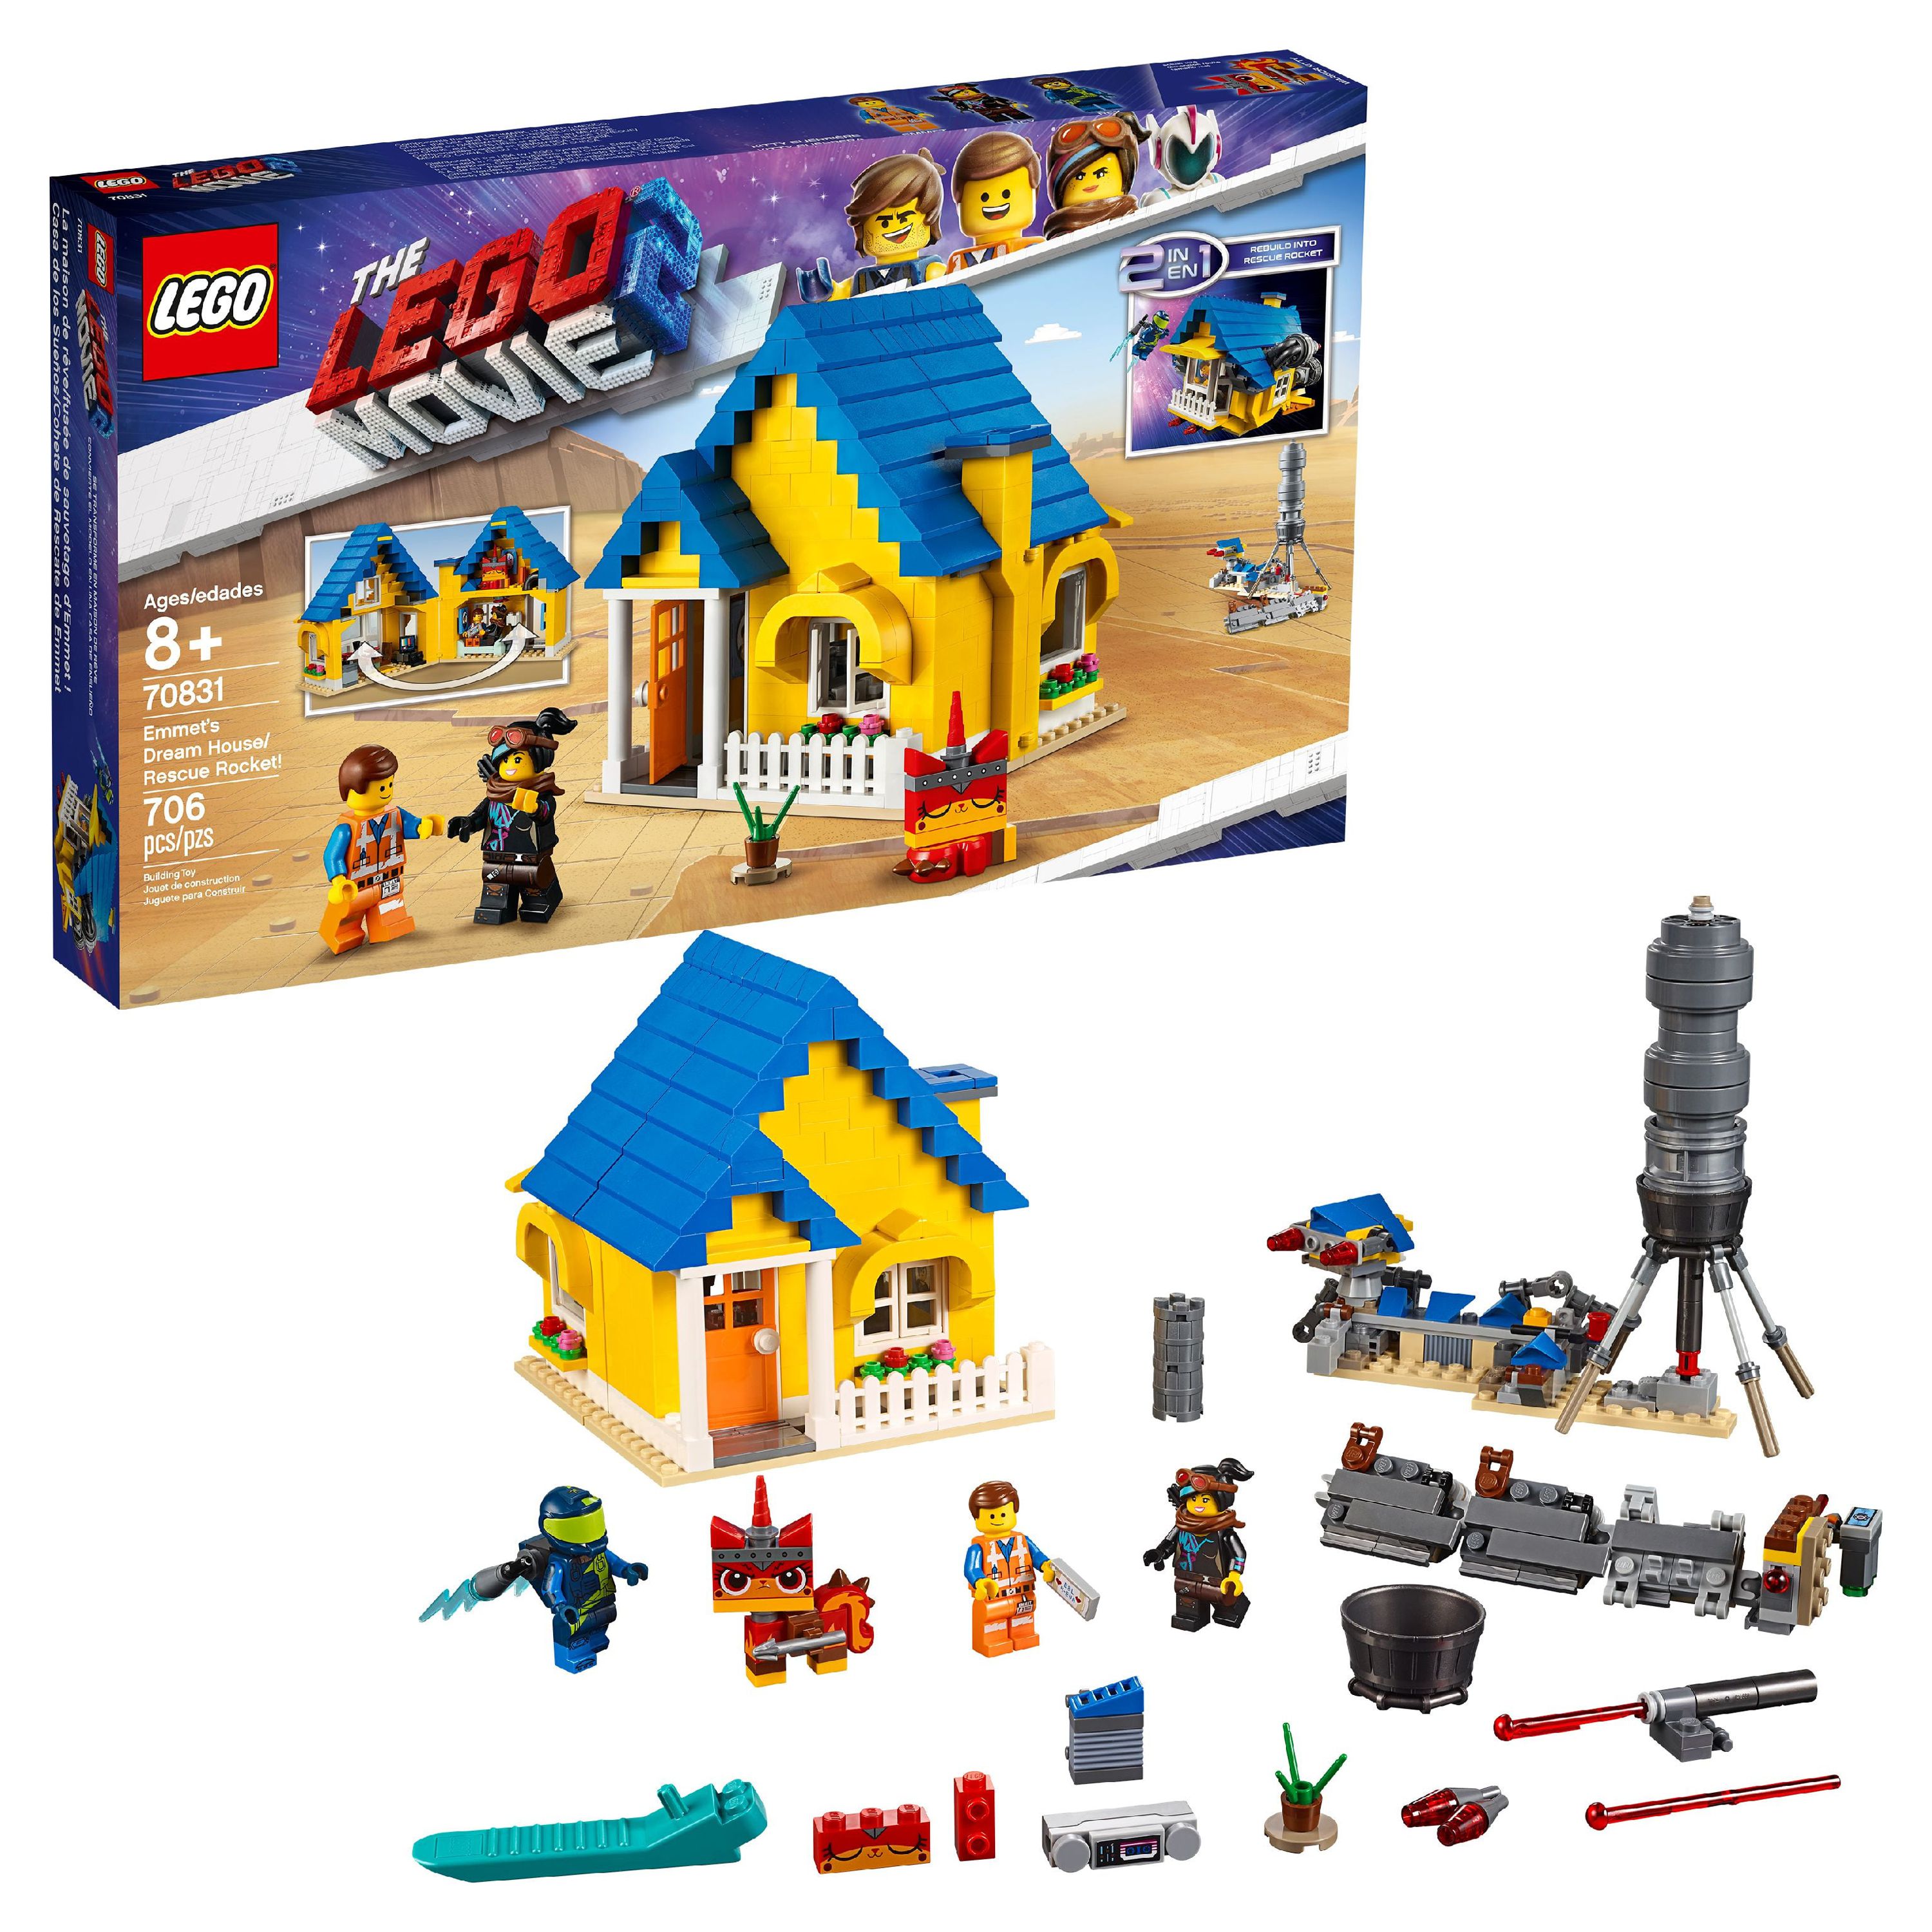 LEGO 70831 The LEGO Movie 2 Emmet's Dream House/Rescue Rocket. - image 1 of 7